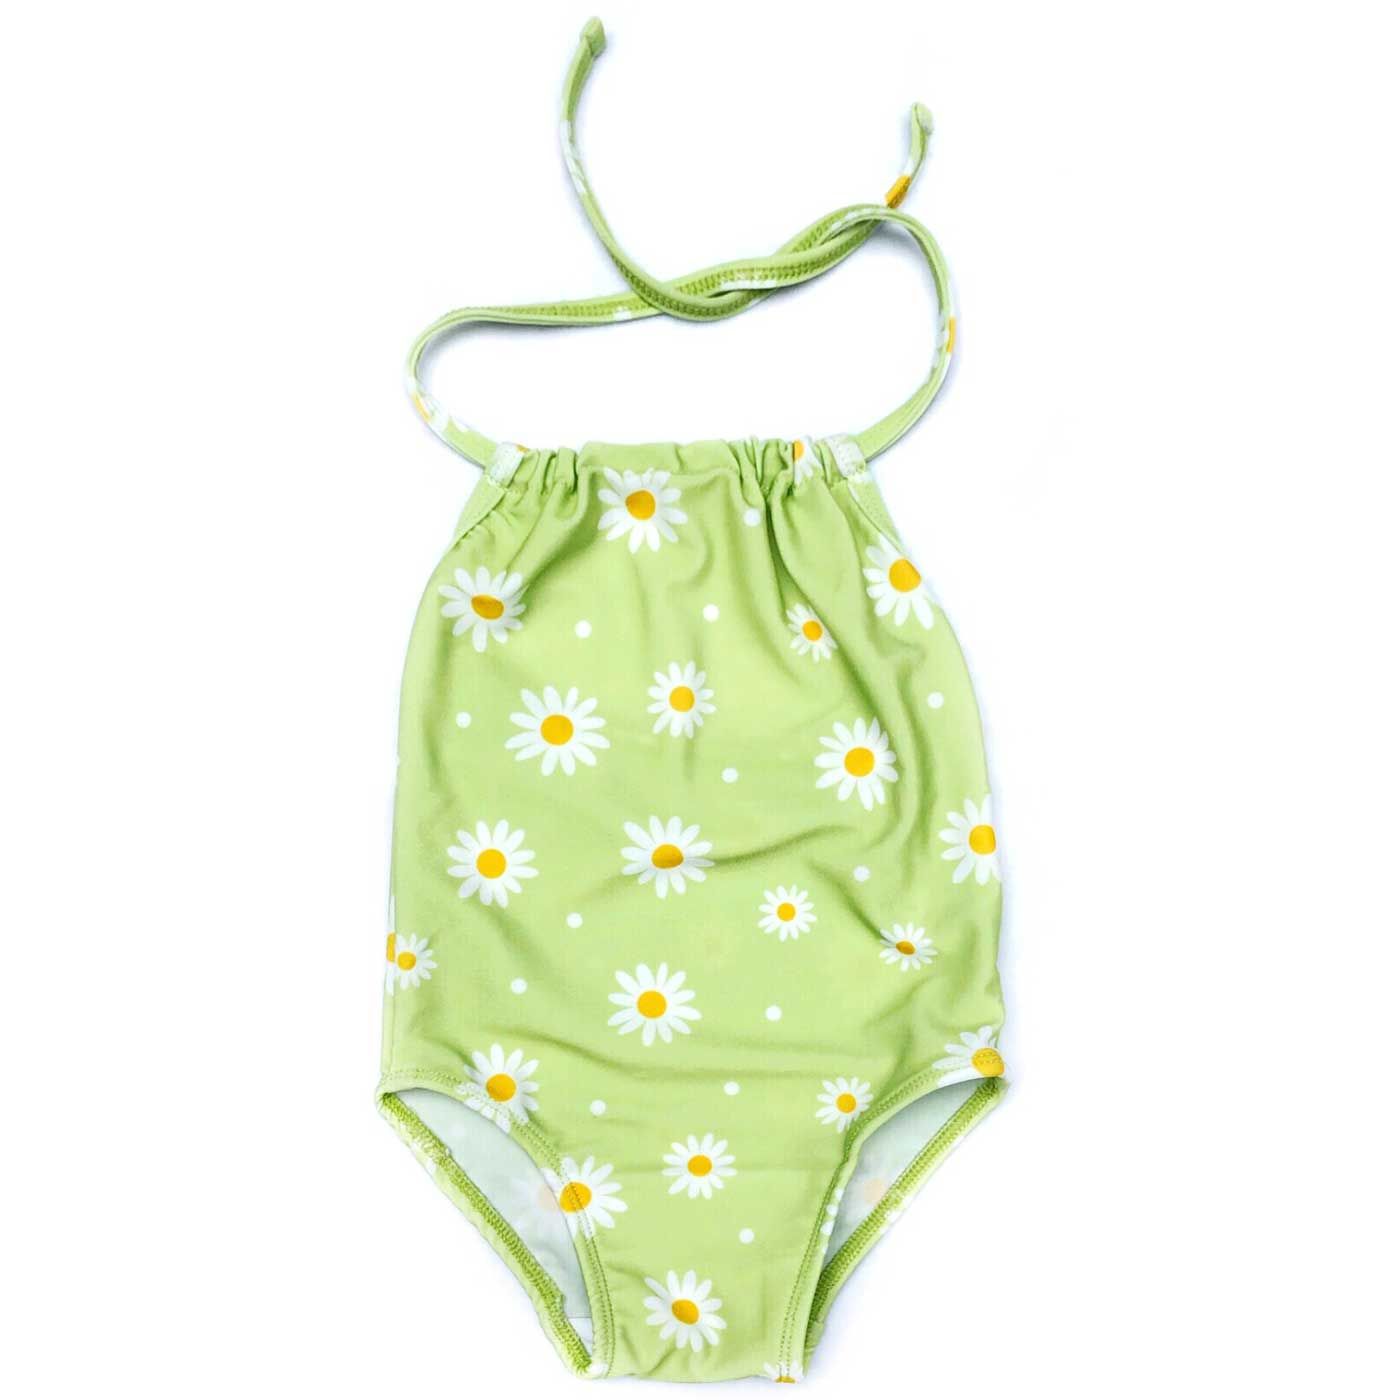 Little Whimsea Daisy Swimsuit in Lime - M - 1